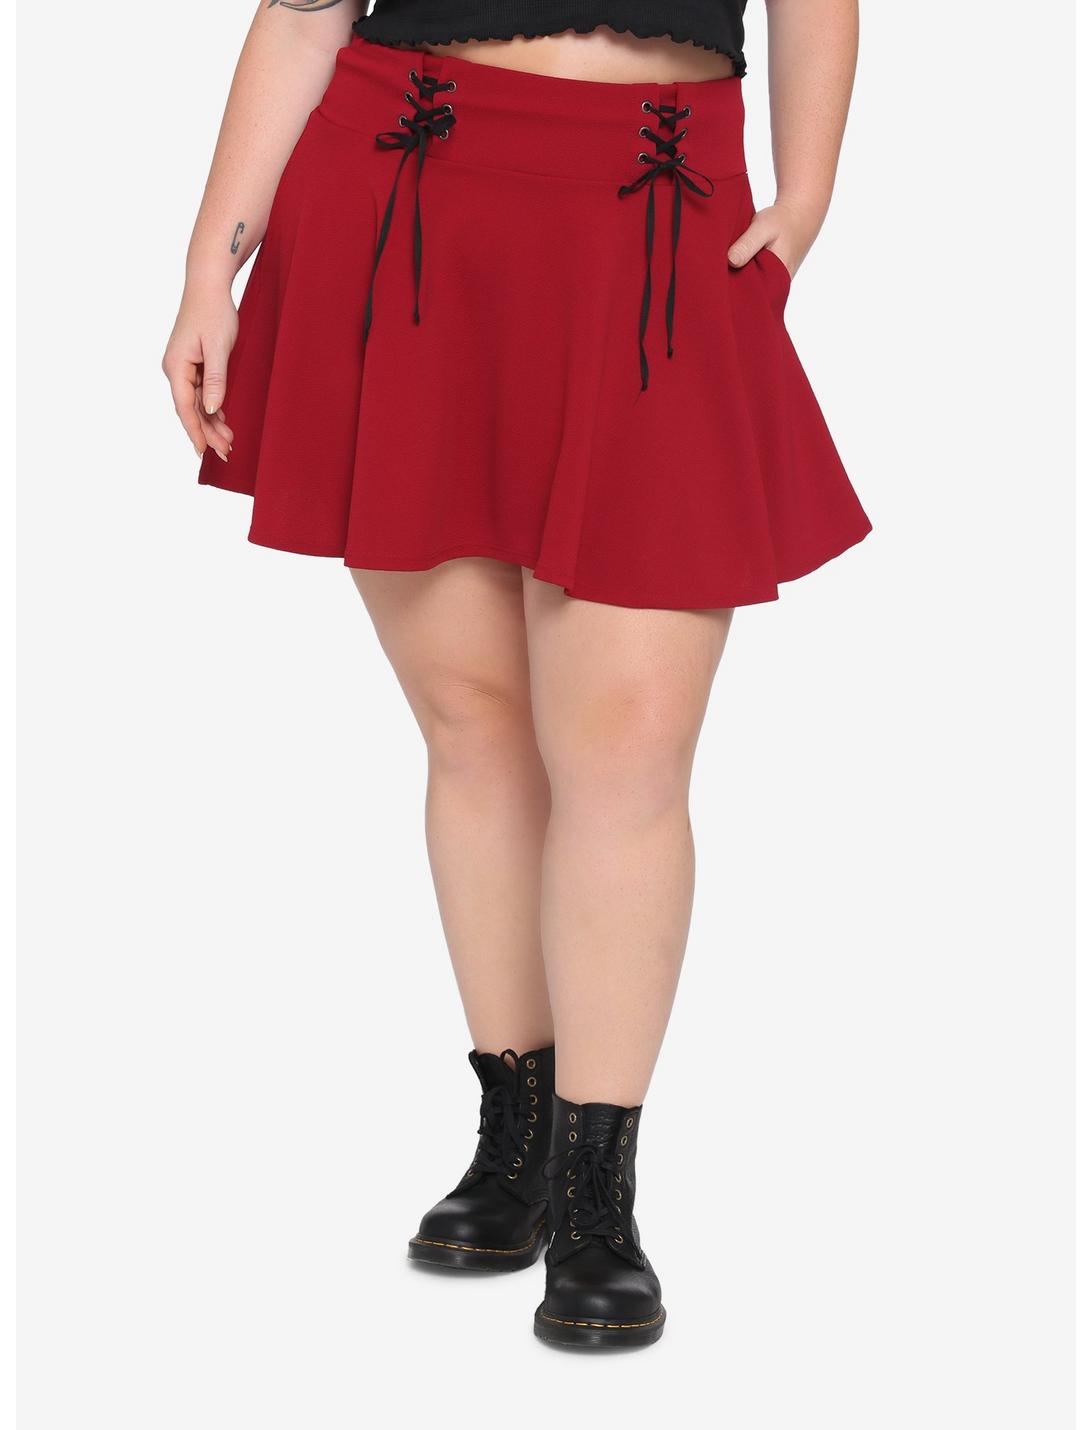 Red & Black Lace-Up Skirt Plus Size, BURGUNDY, hi-res